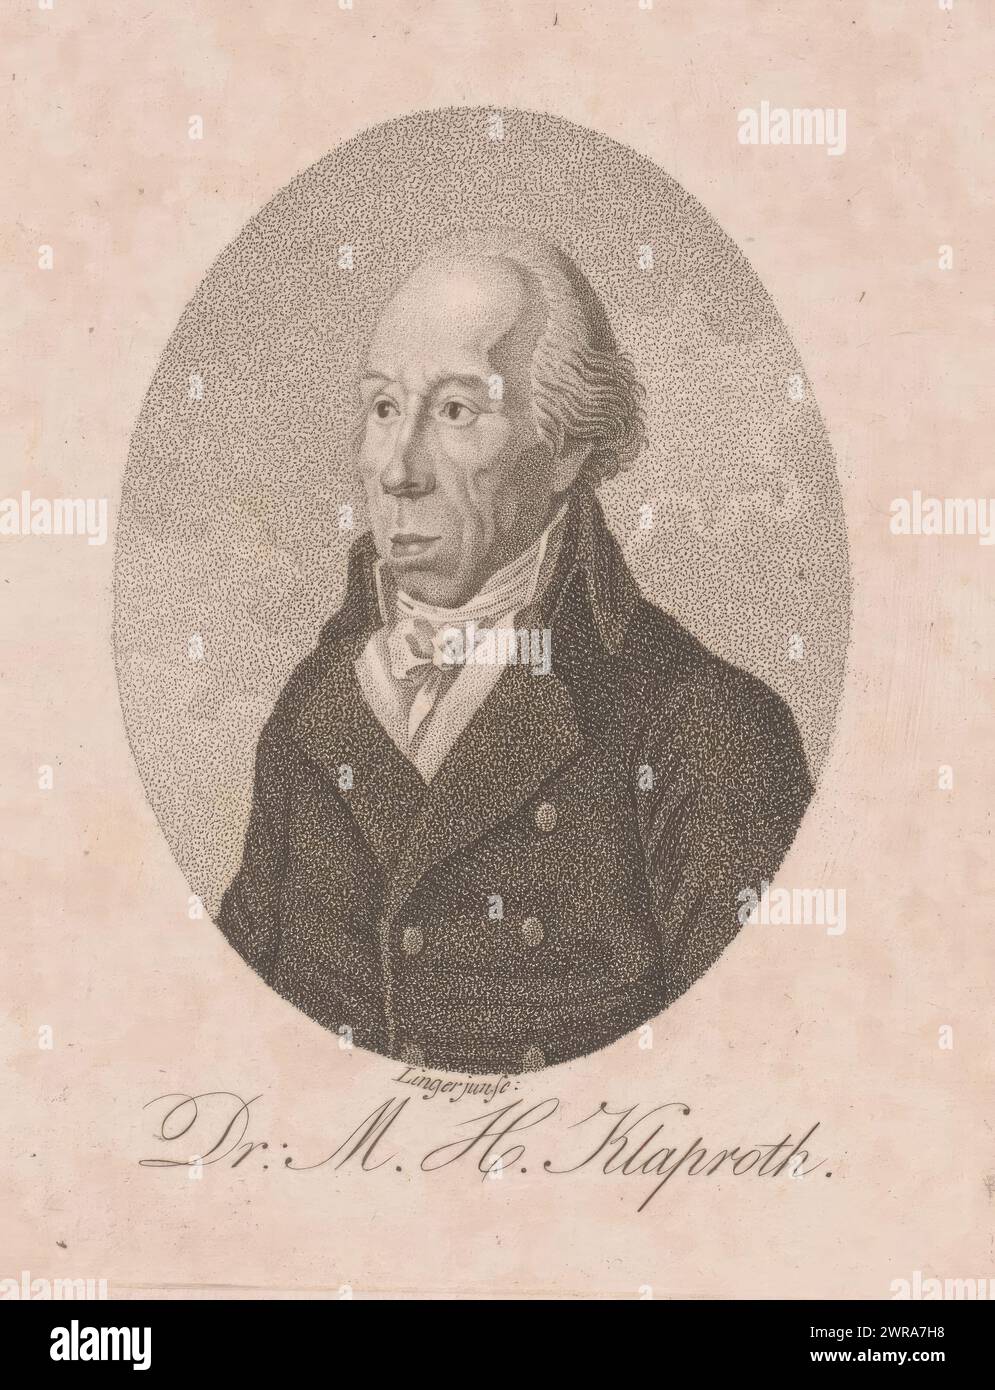 Portrait of Martin Heinrich Klaproth, print maker: Friedrich Wilhelm Linger, 1797 - 1844, paper, height 111 mm × width 90 mm, print Stock Photo